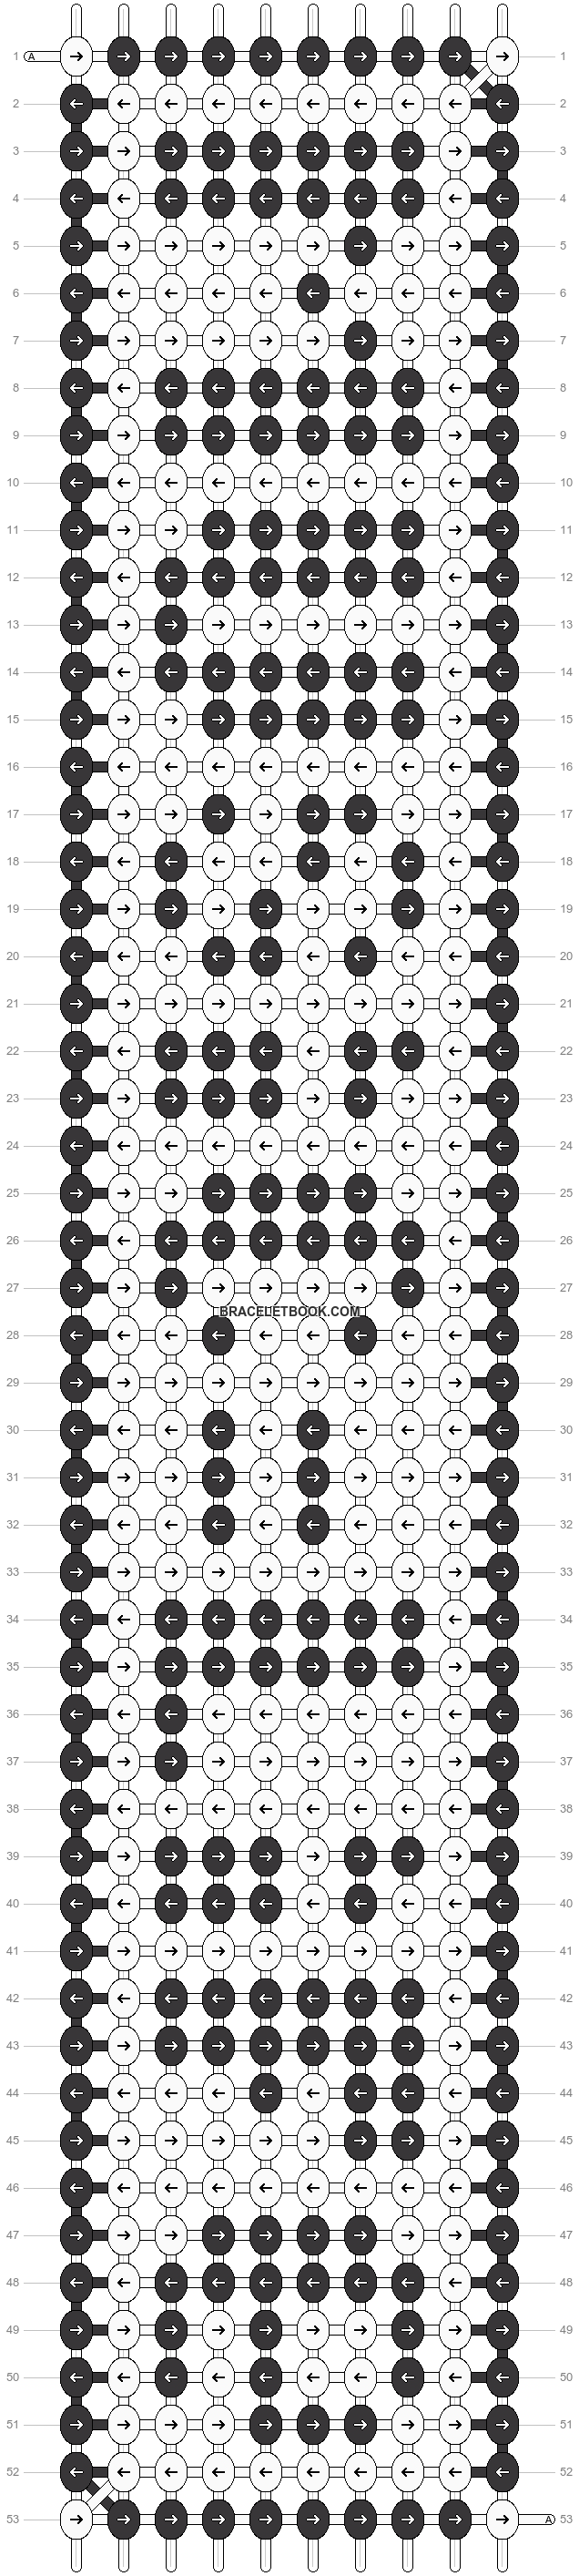 Alpha pattern #4518 pattern